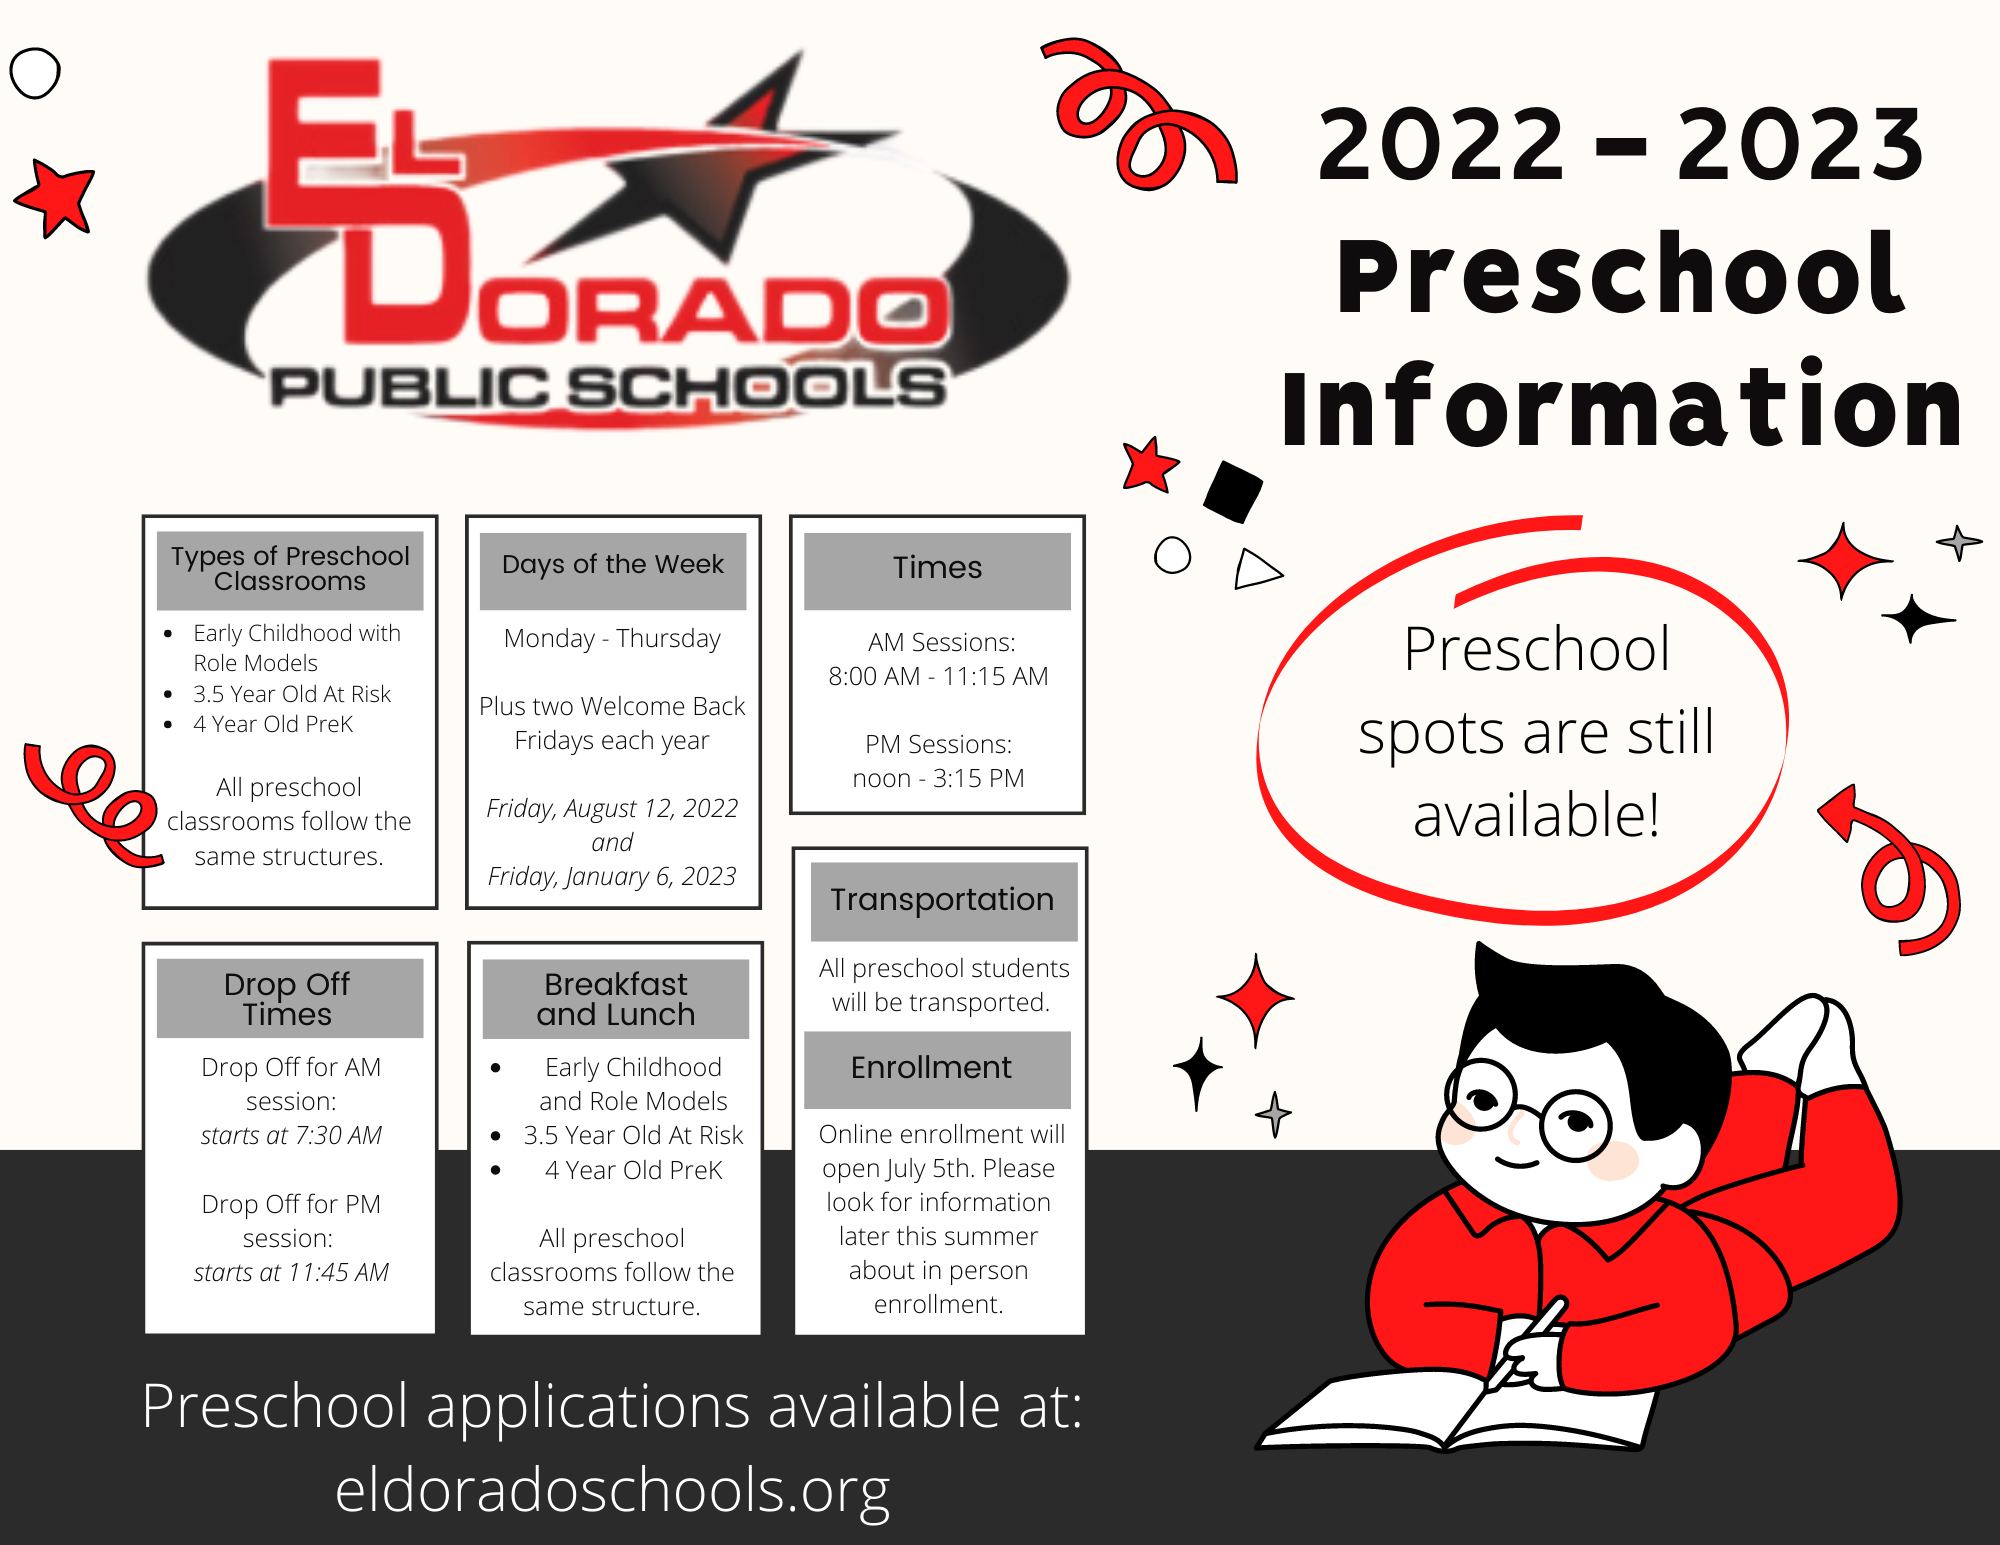 22-23 Preschool Information